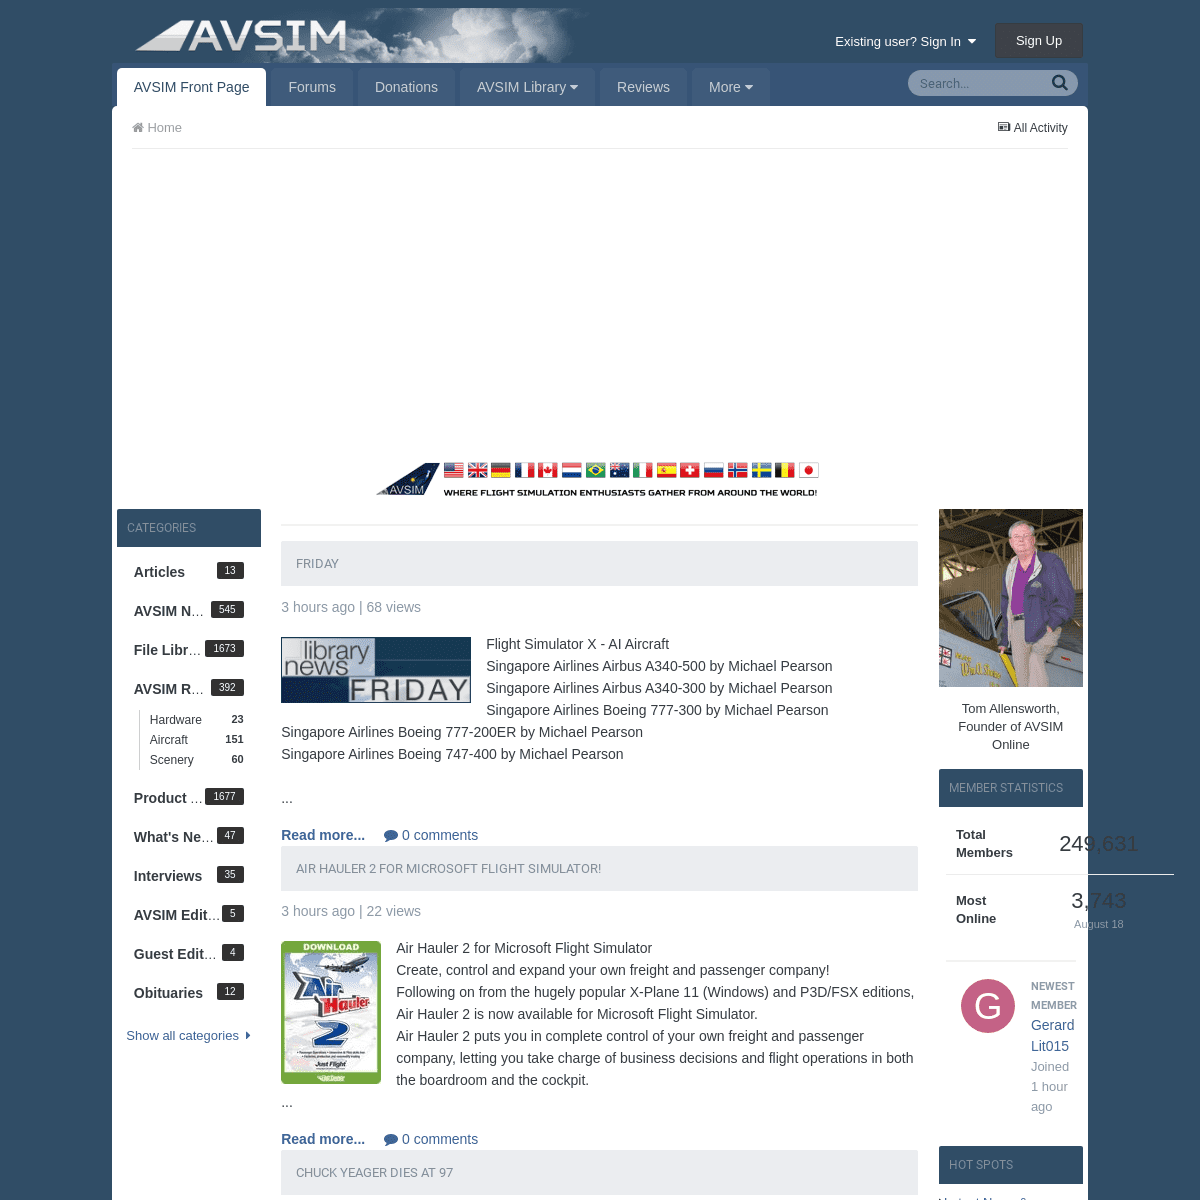 A complete backup of avsim.net